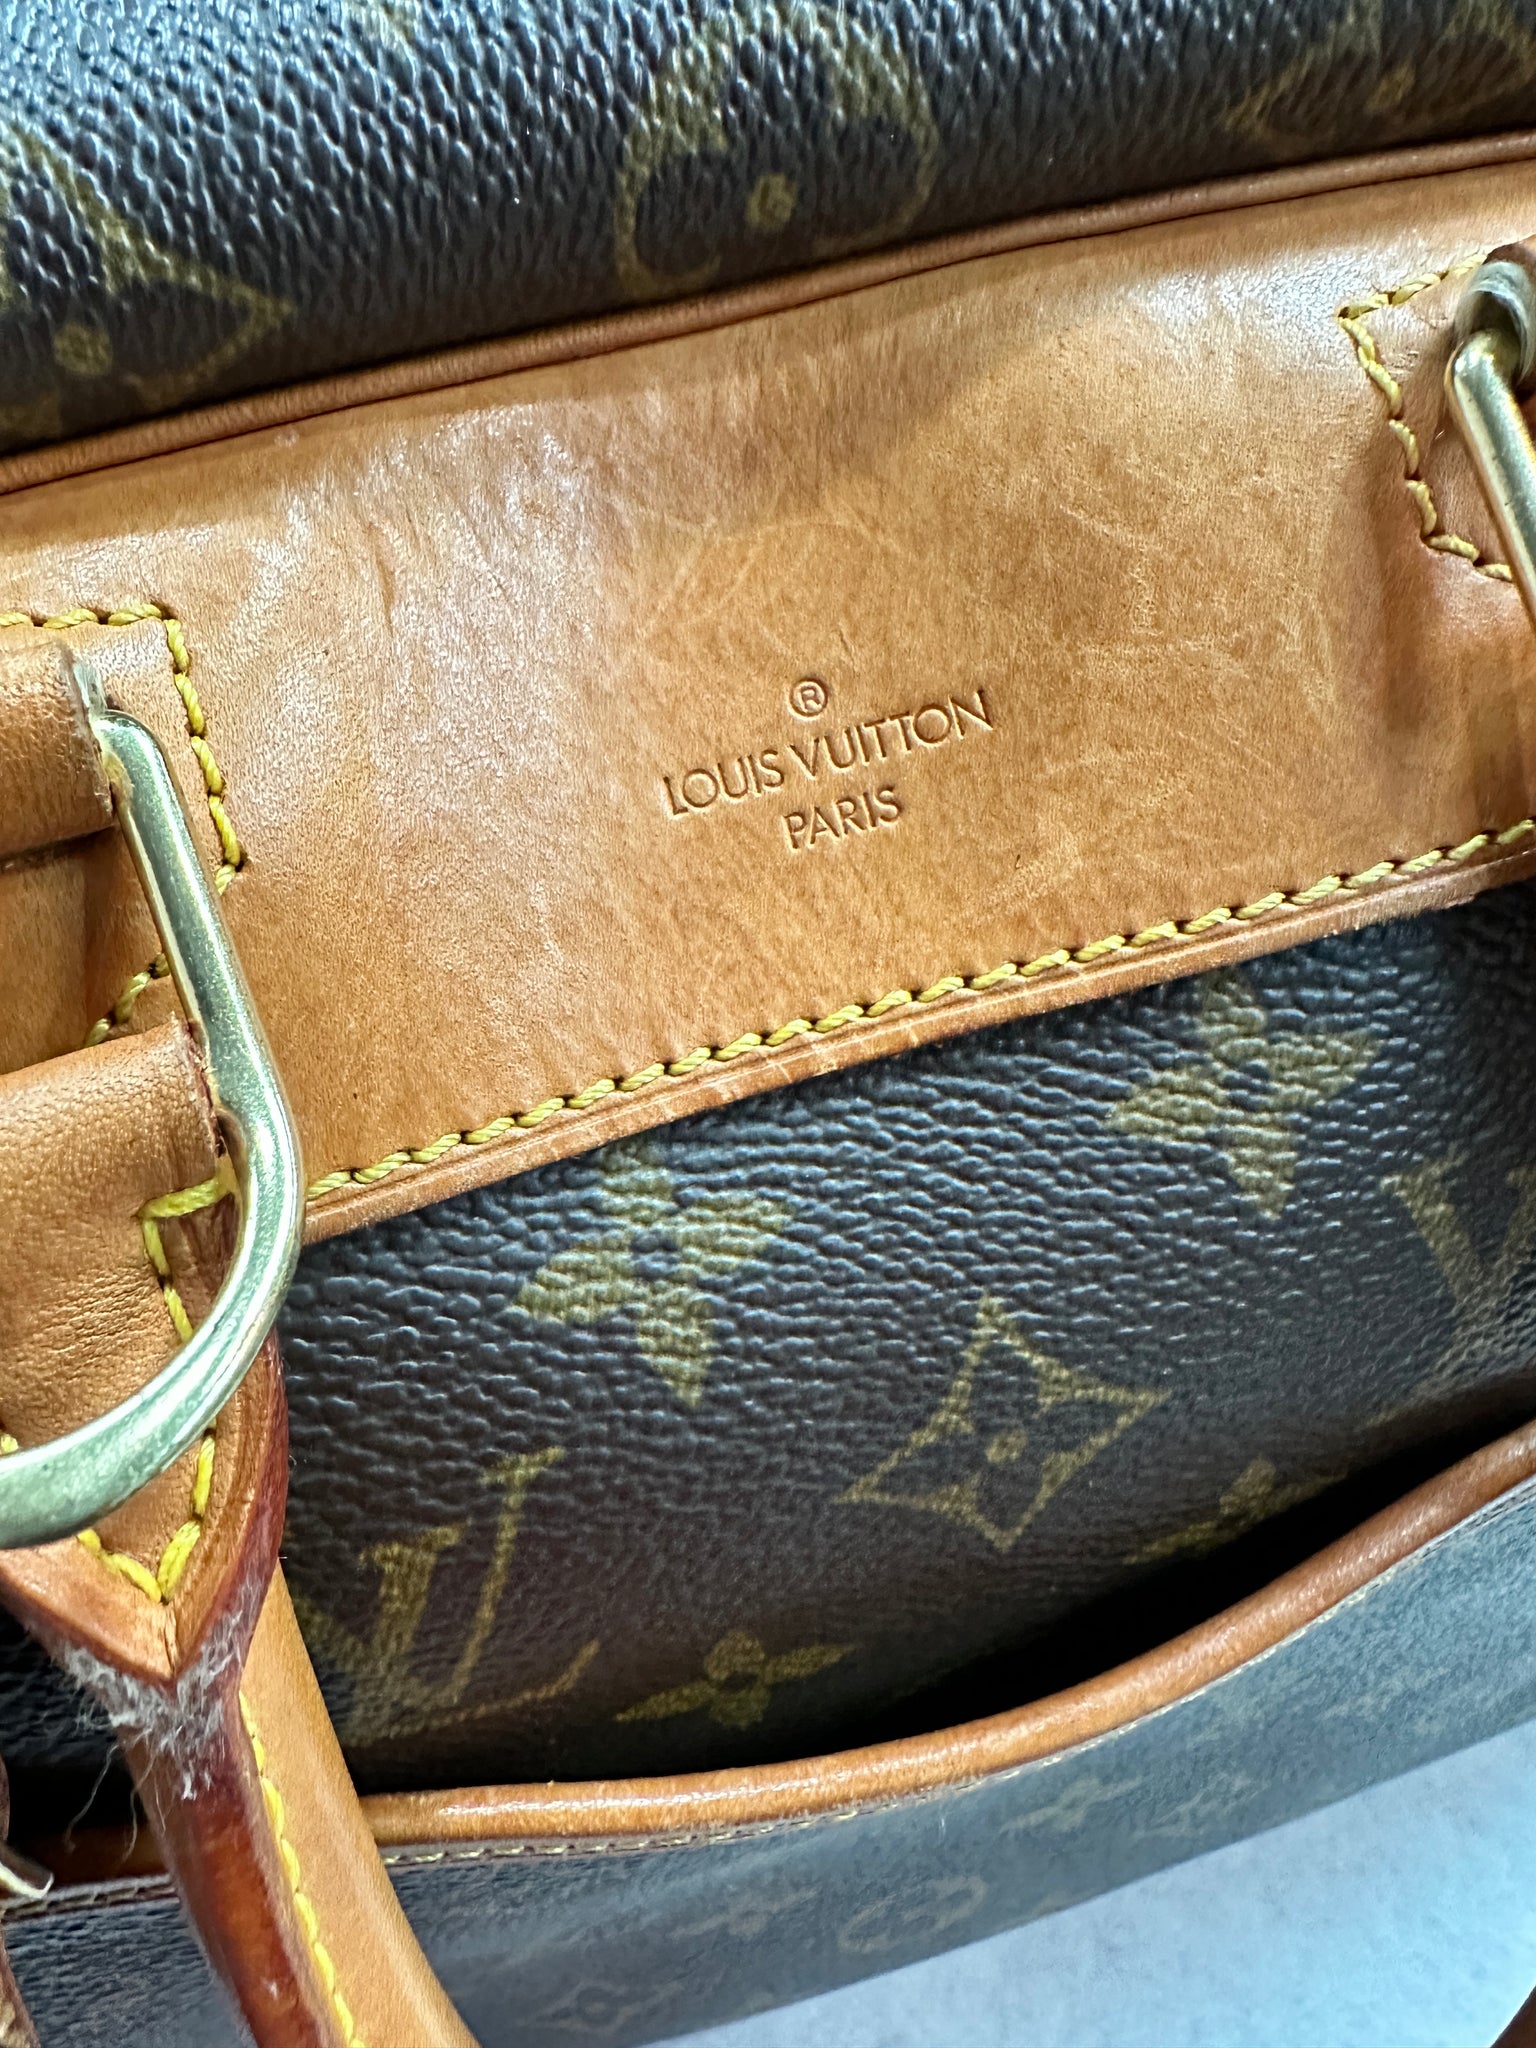 Authentic Louis Vuitton Monogram Deauville Vanity Bag Handbag Toiletry –  Relics to Rhinestones